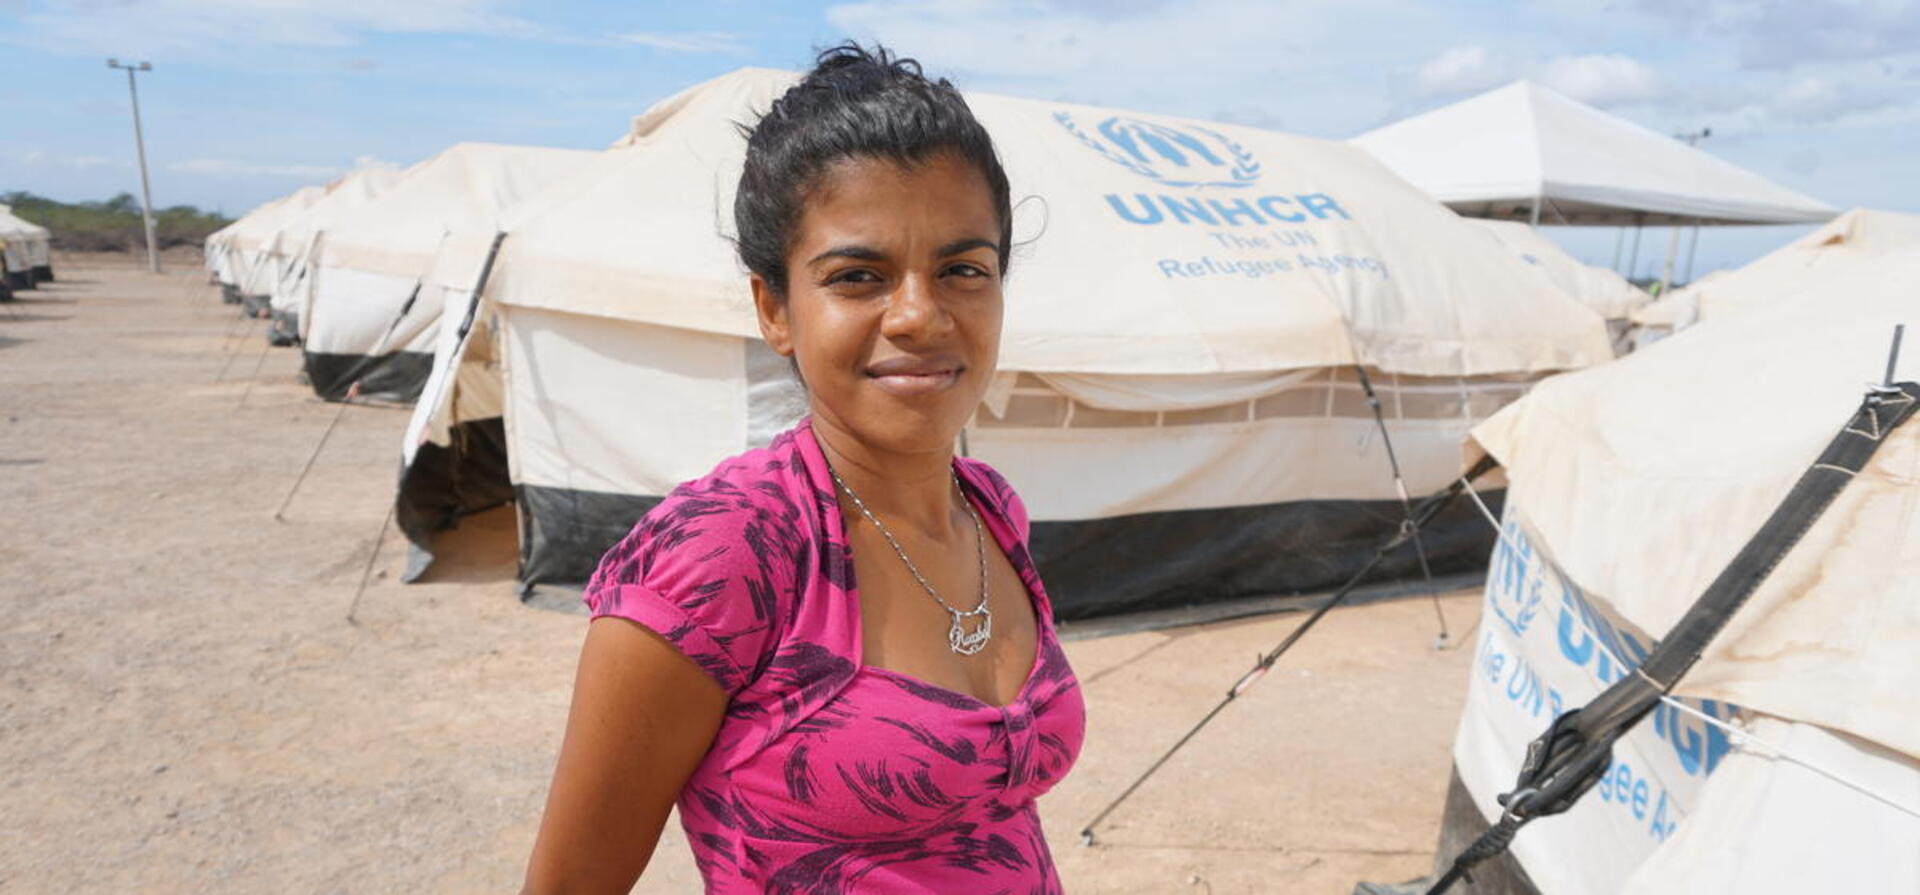 Pregnant women flee lack of maternal health care in Venezuela UNHCR image